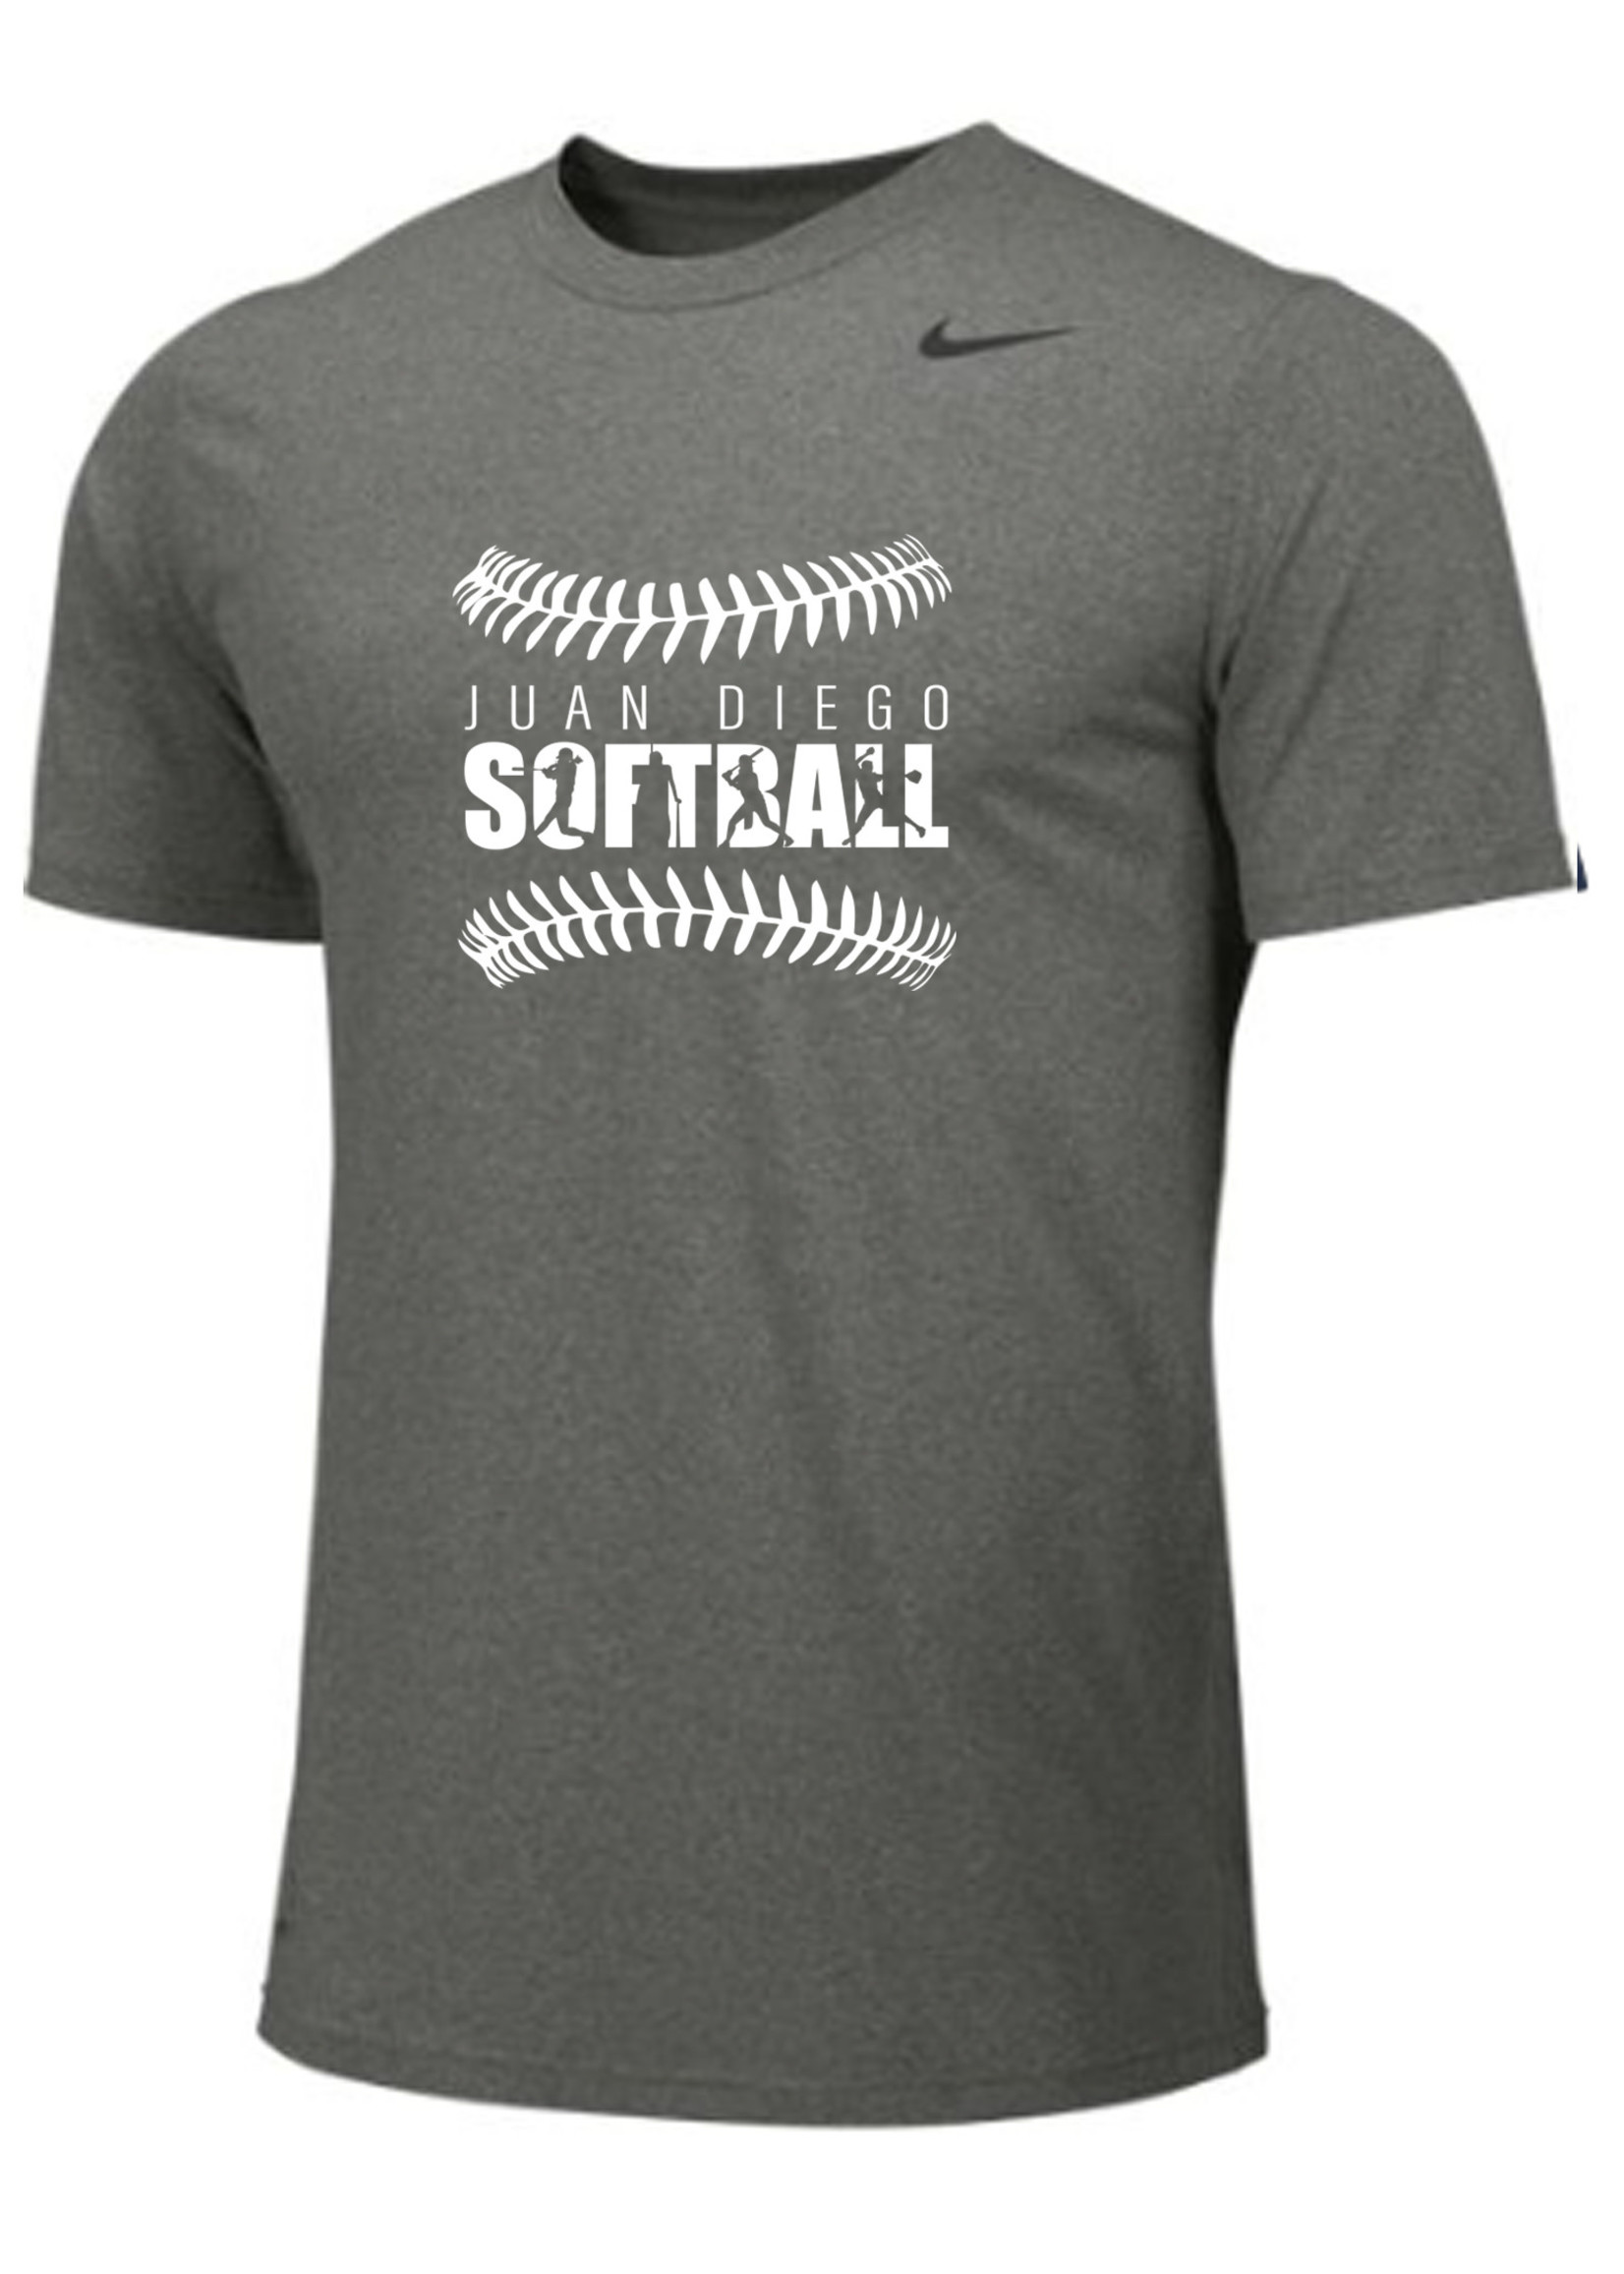 NON-UNIFORM JD Softball Nike Spirit T-Shirt